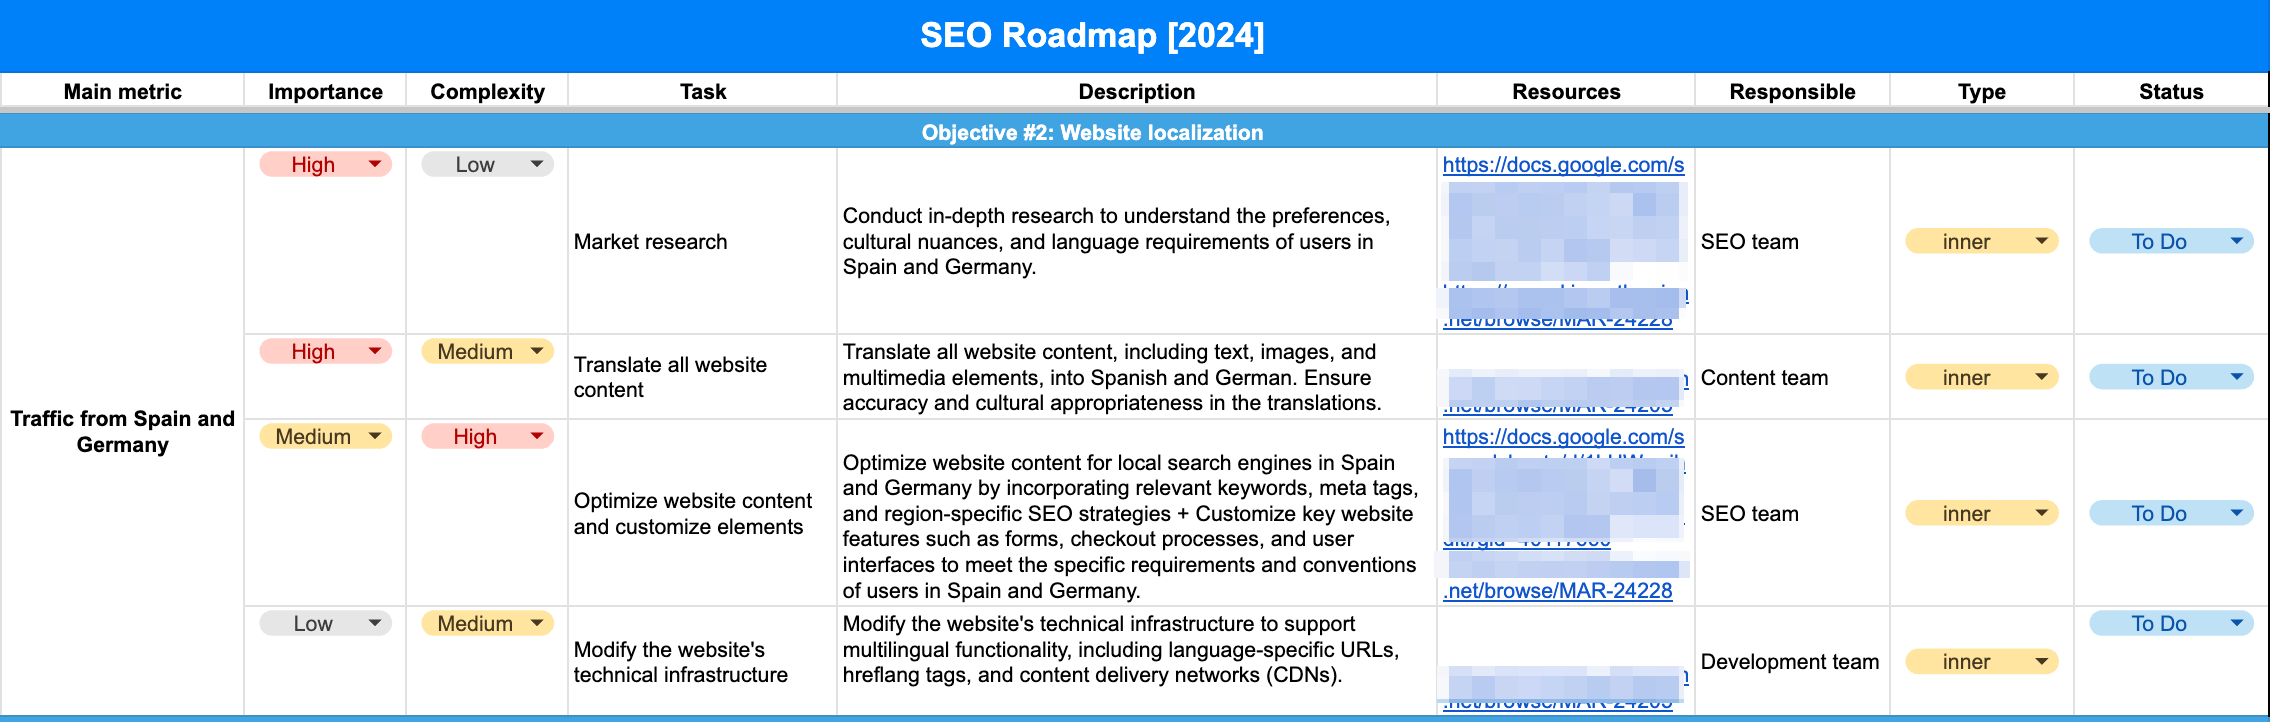 SEO roadmap example